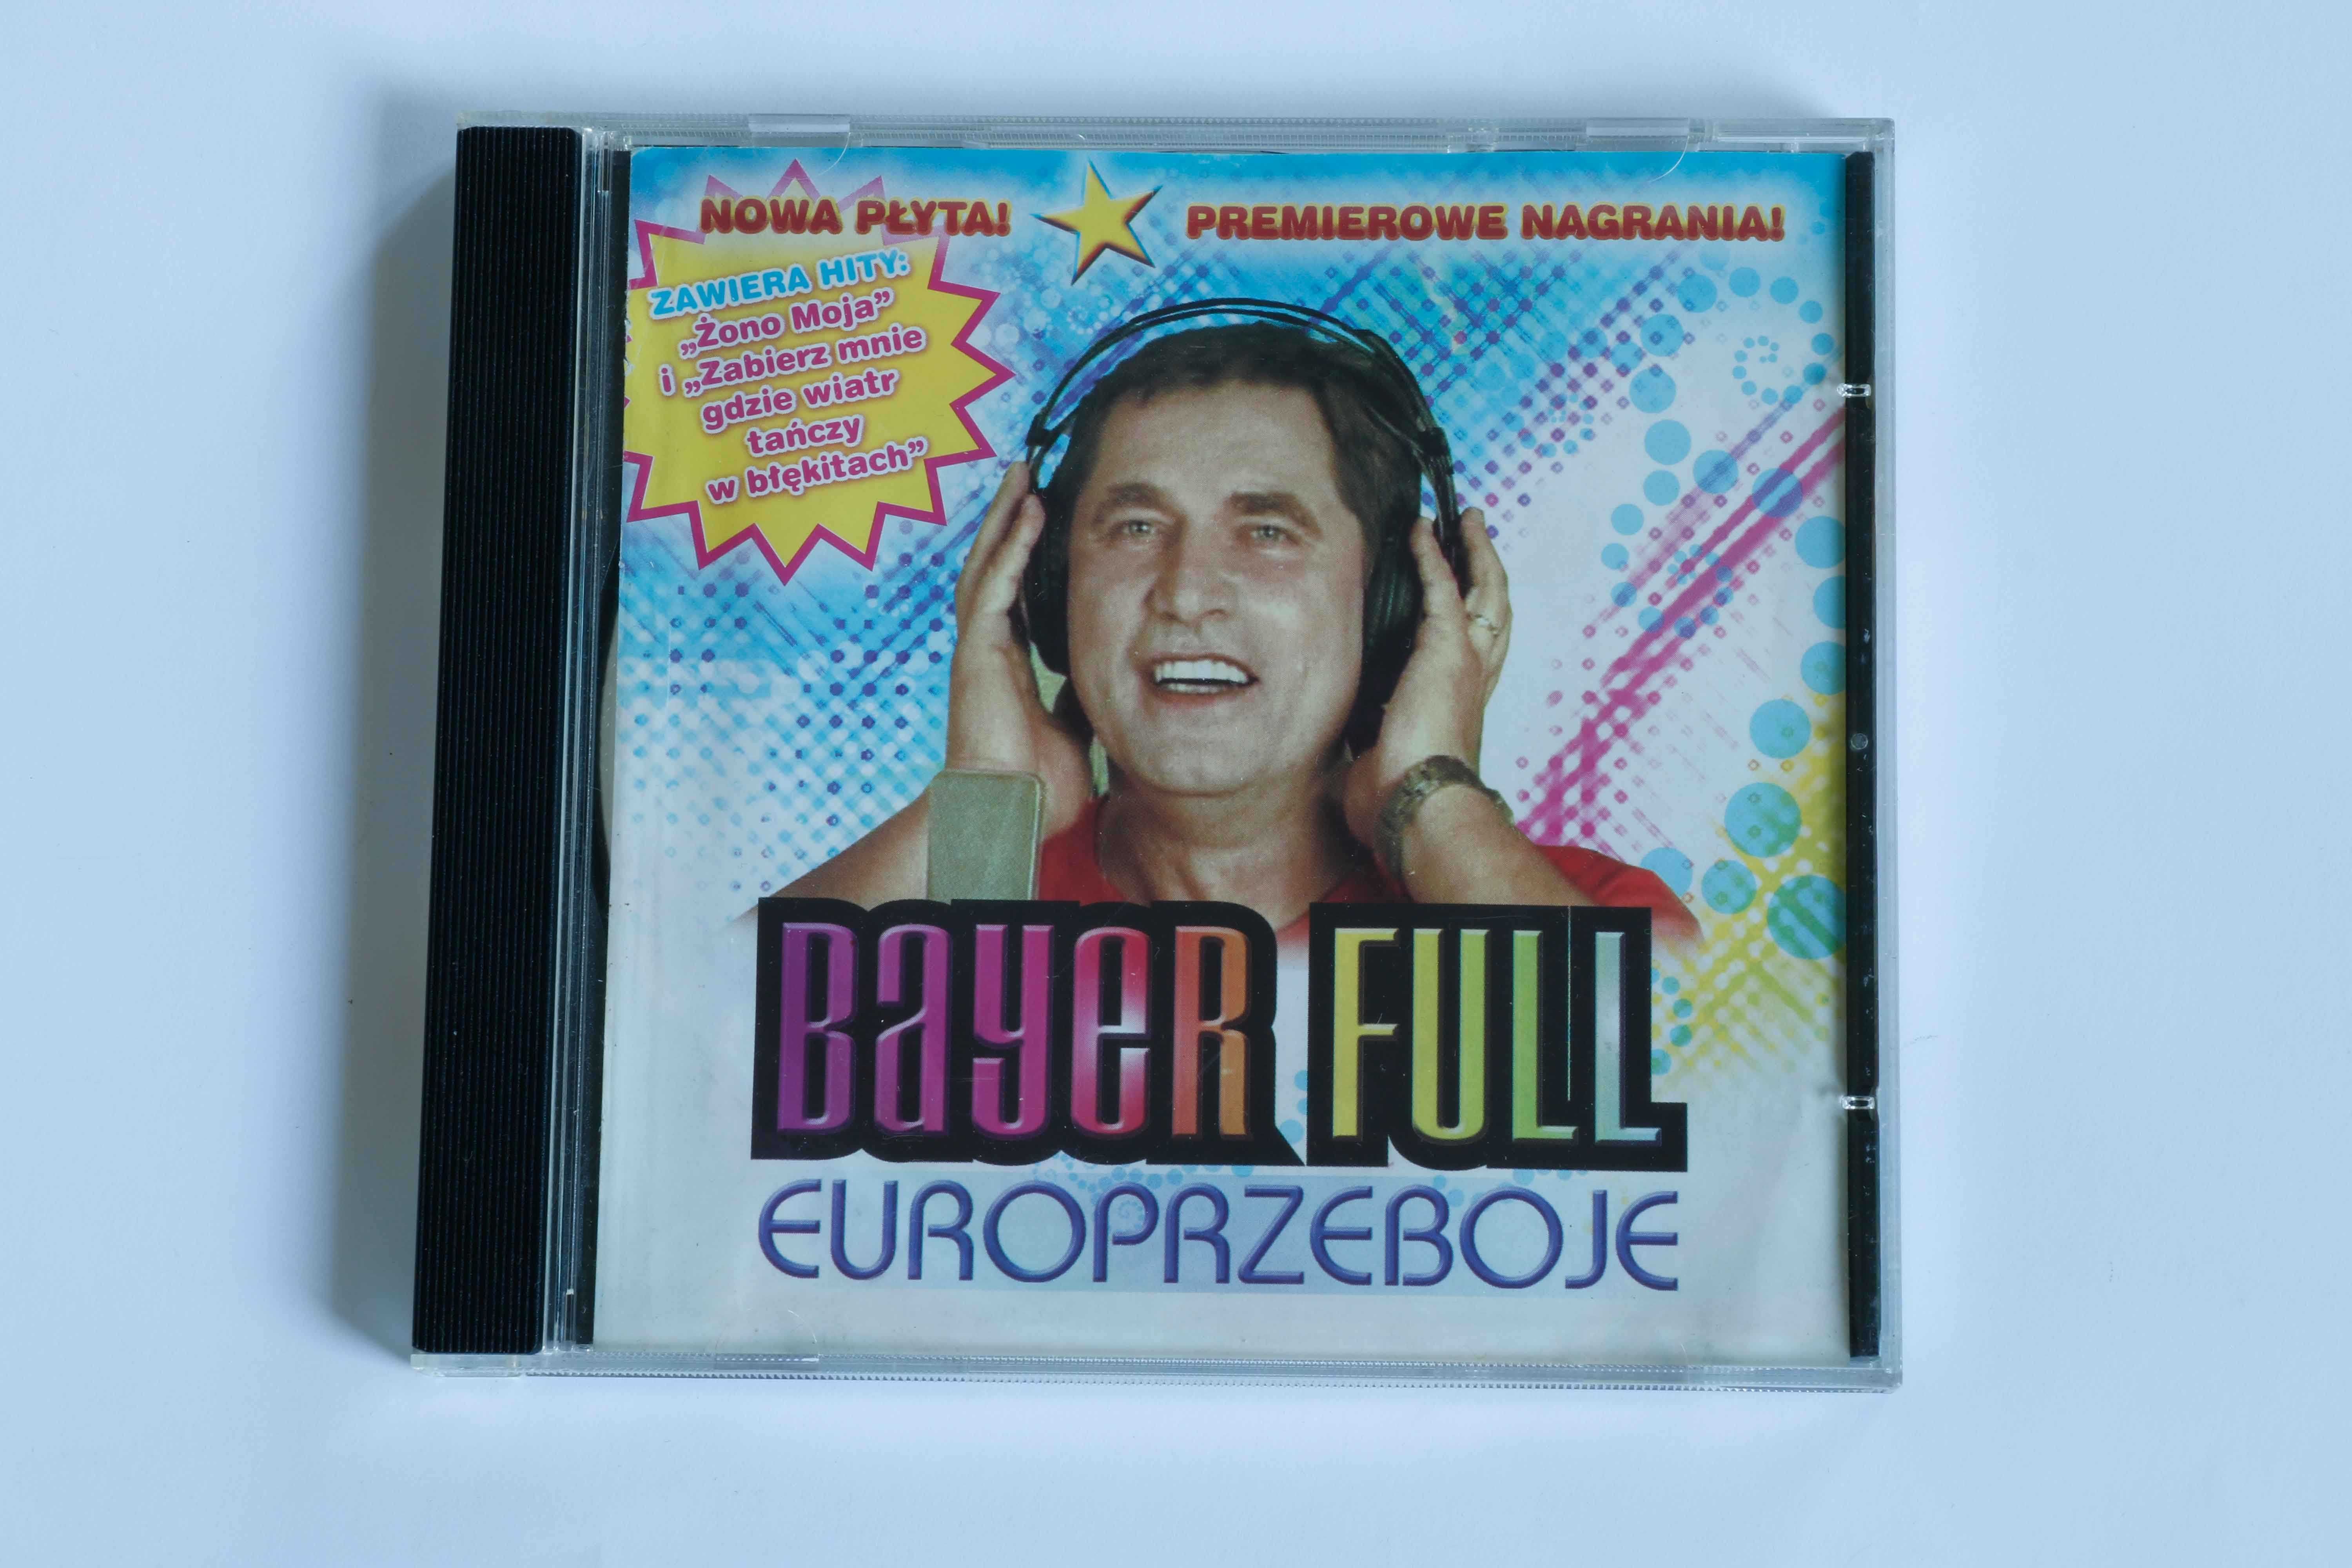 Bayer Full - Europrzeboje - CD